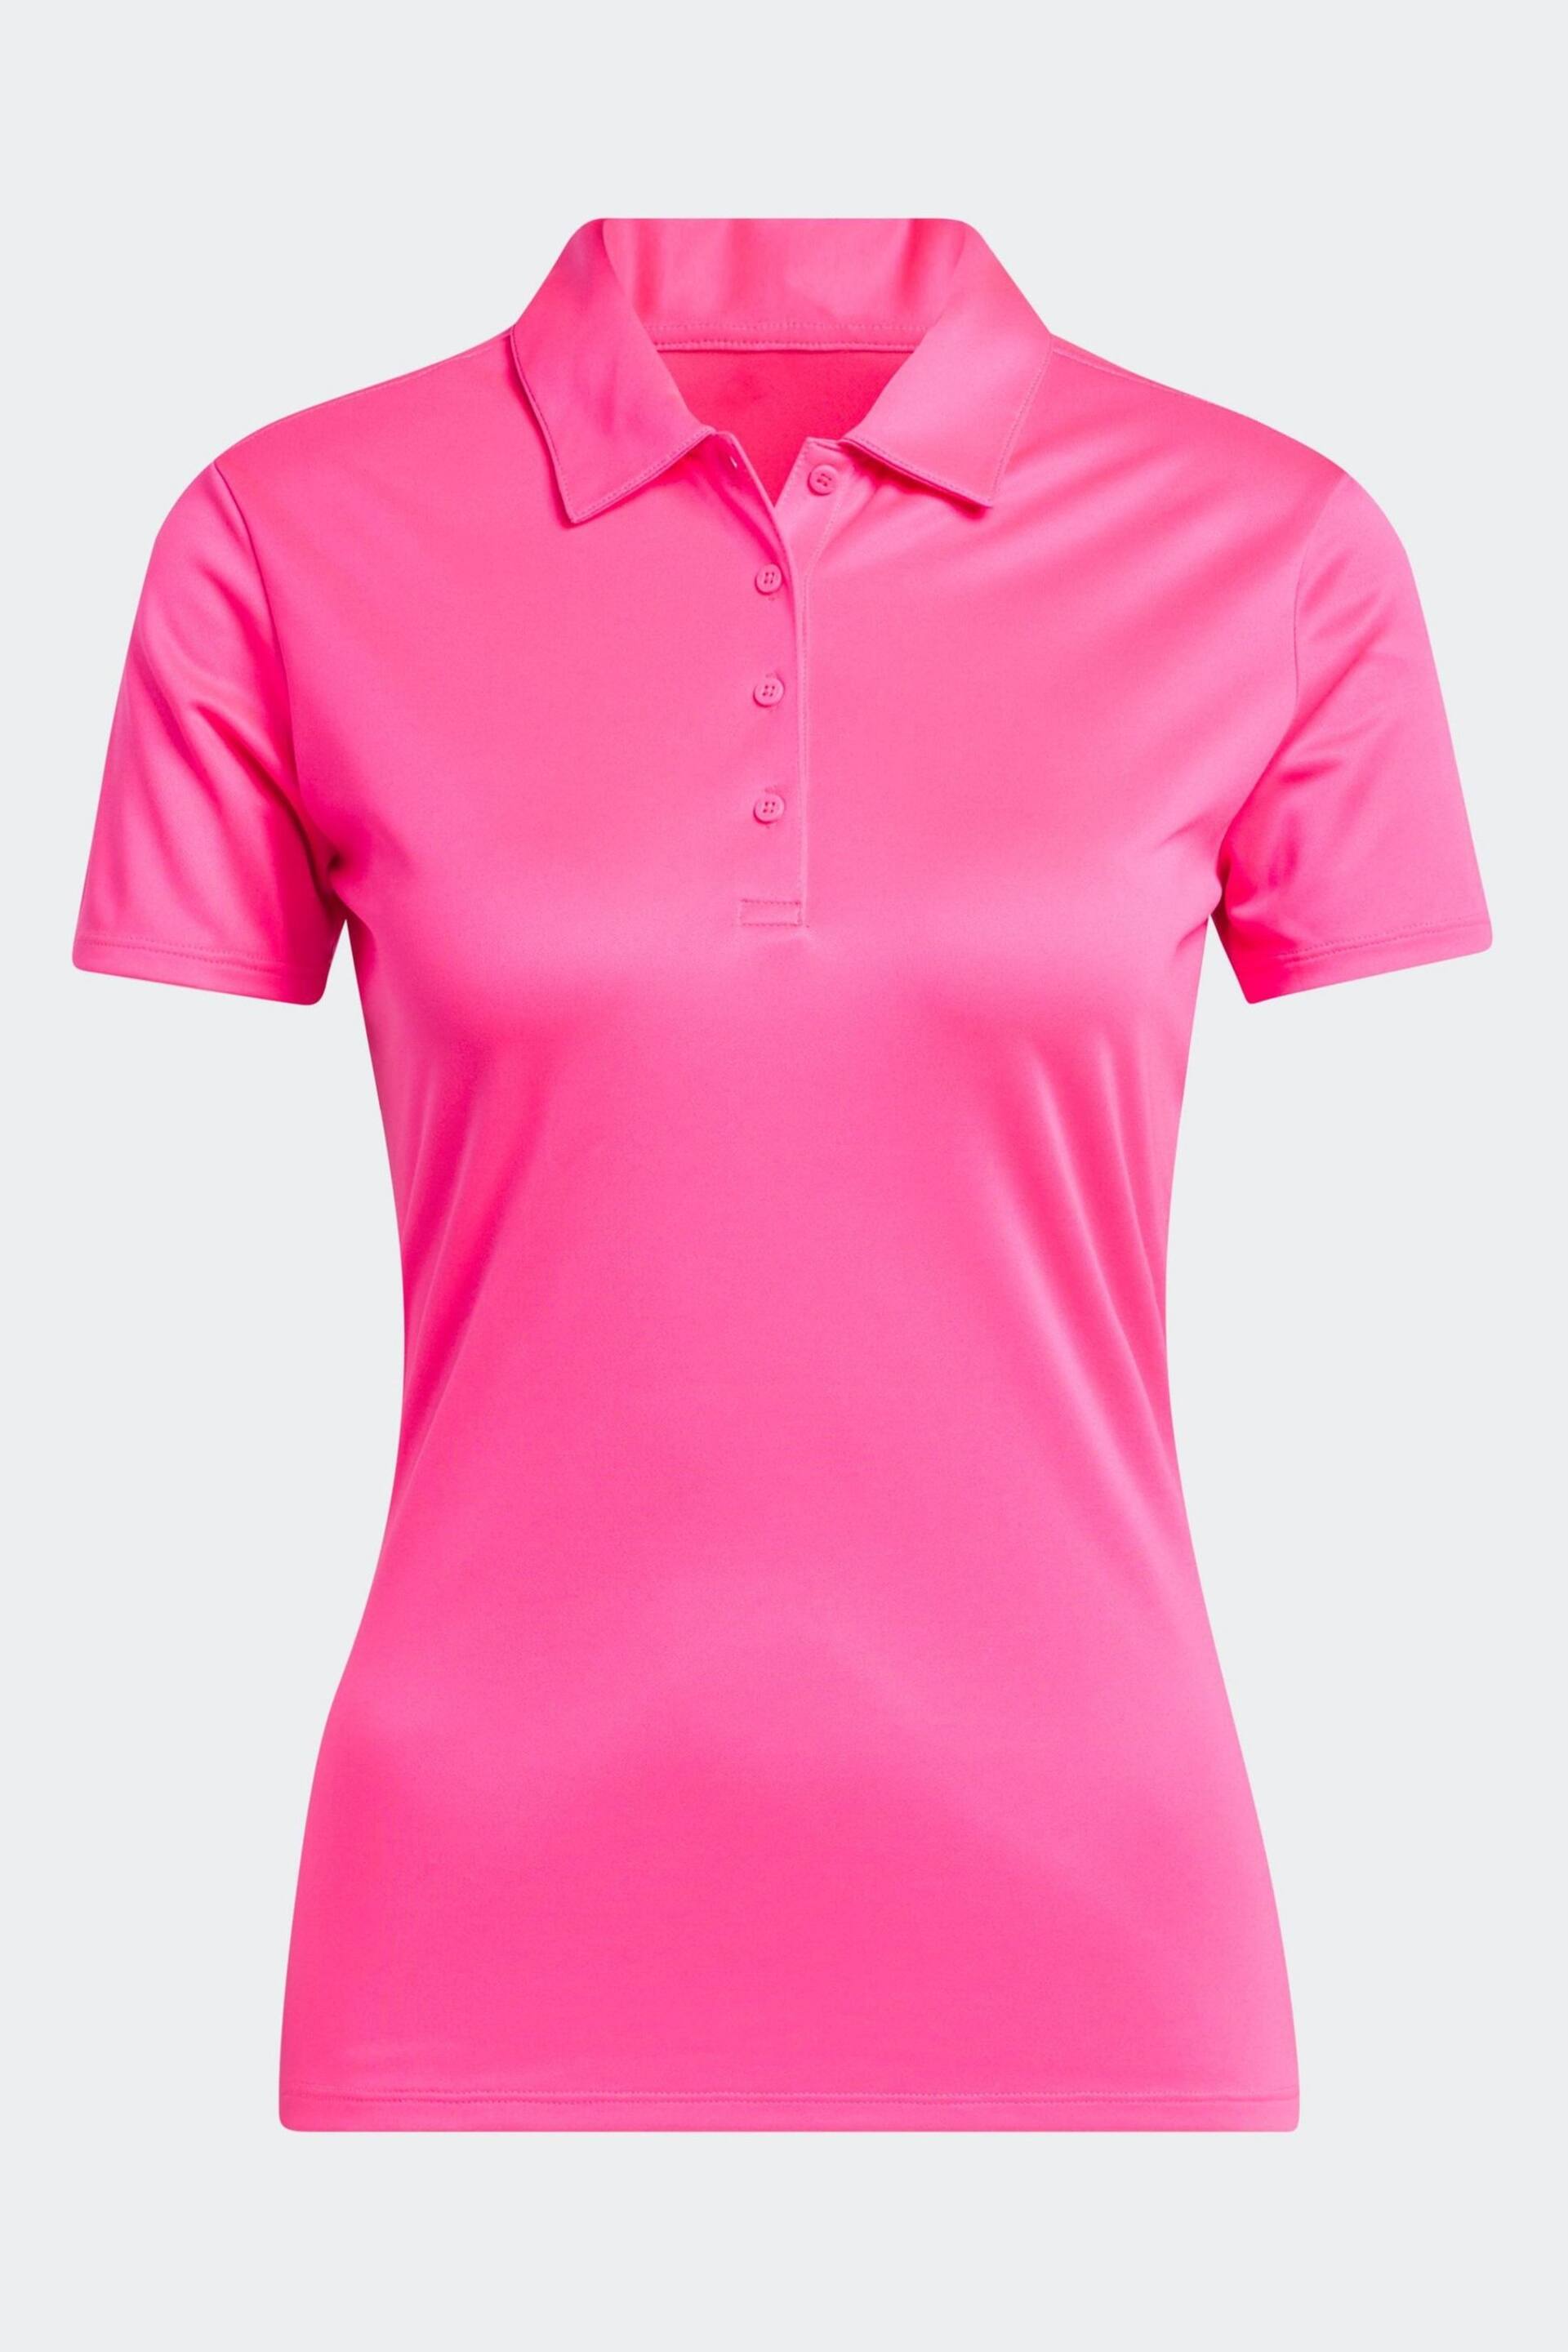 adidas Golf Womens Solid Short Sleeve Polo Shirt - Image 6 of 6